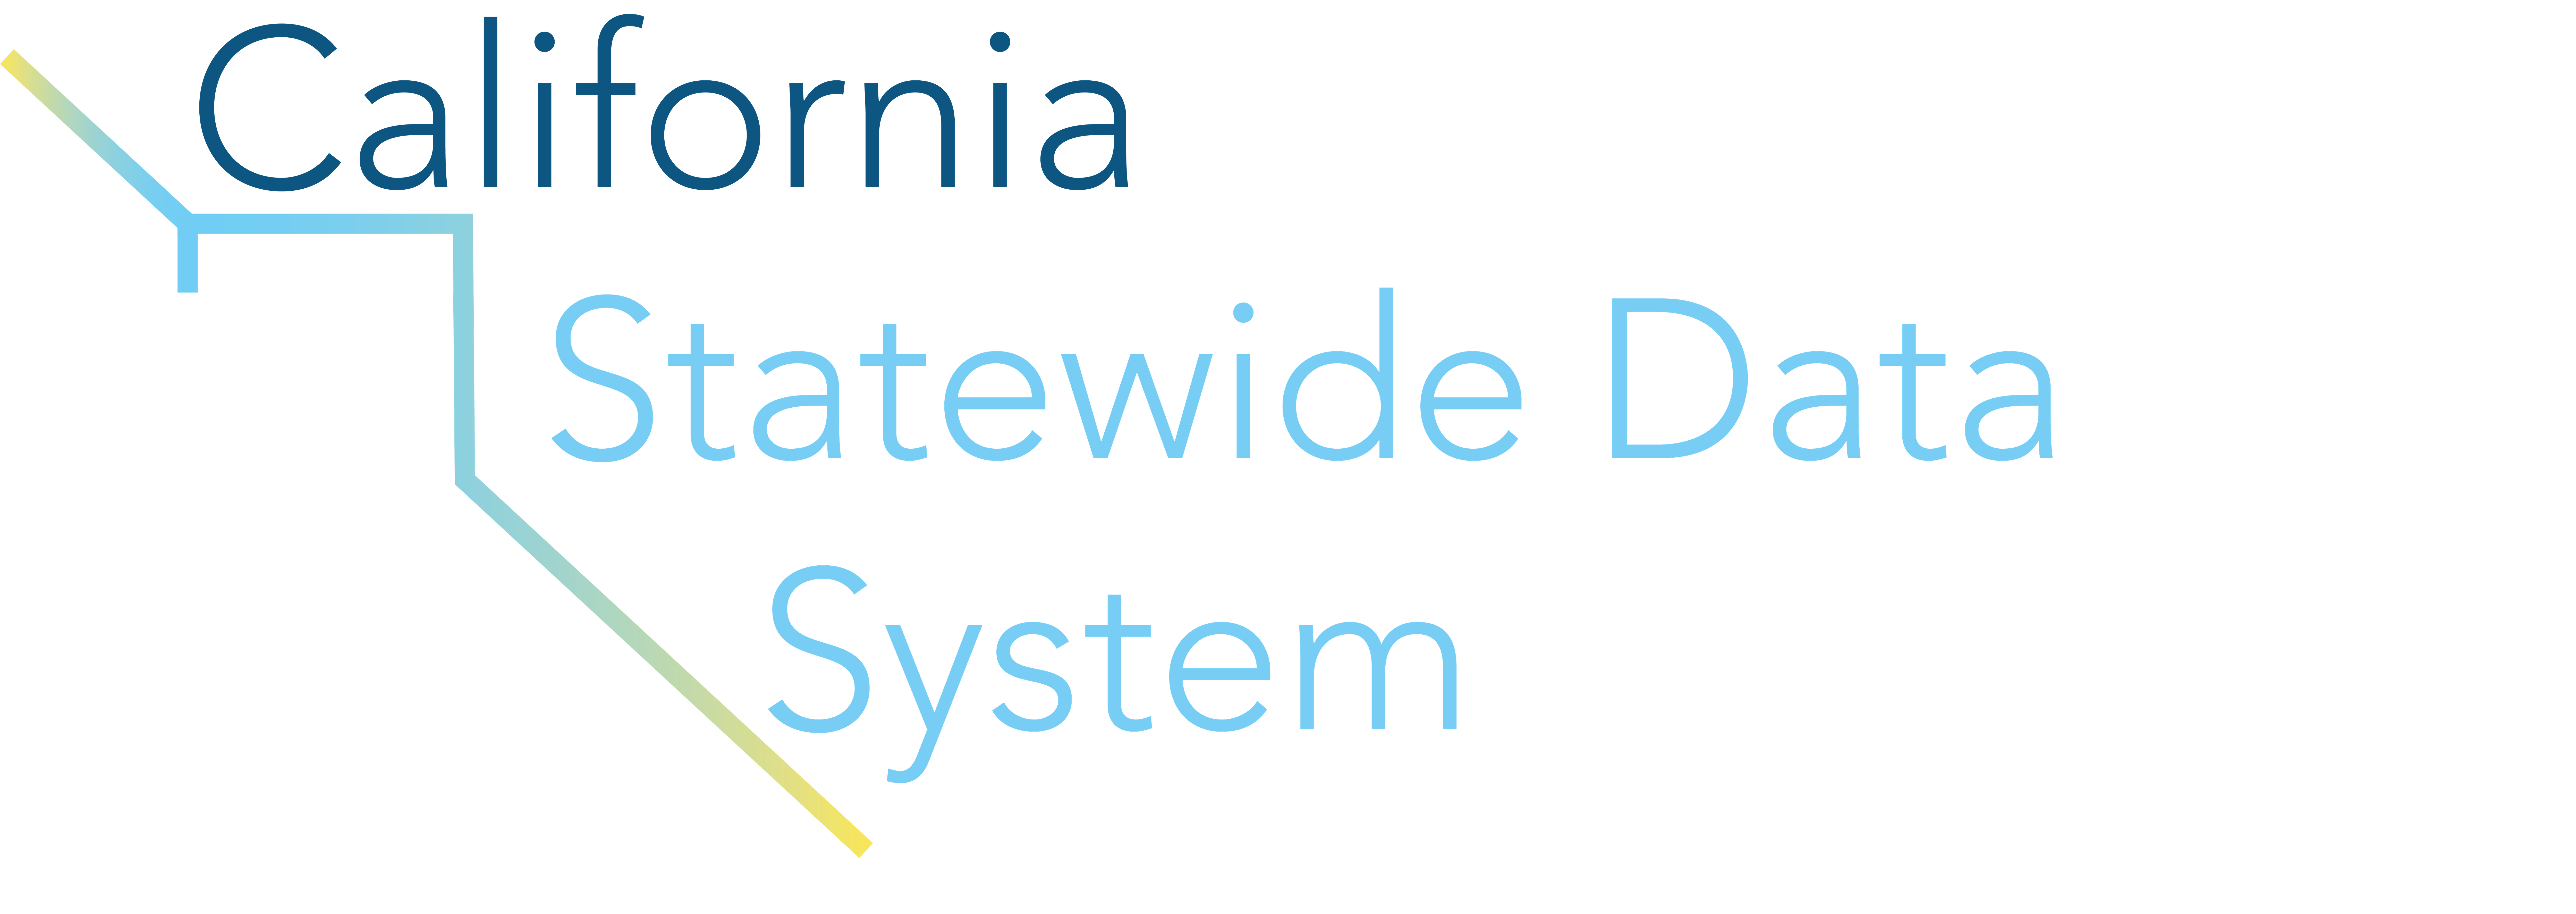 california statewide data system logo